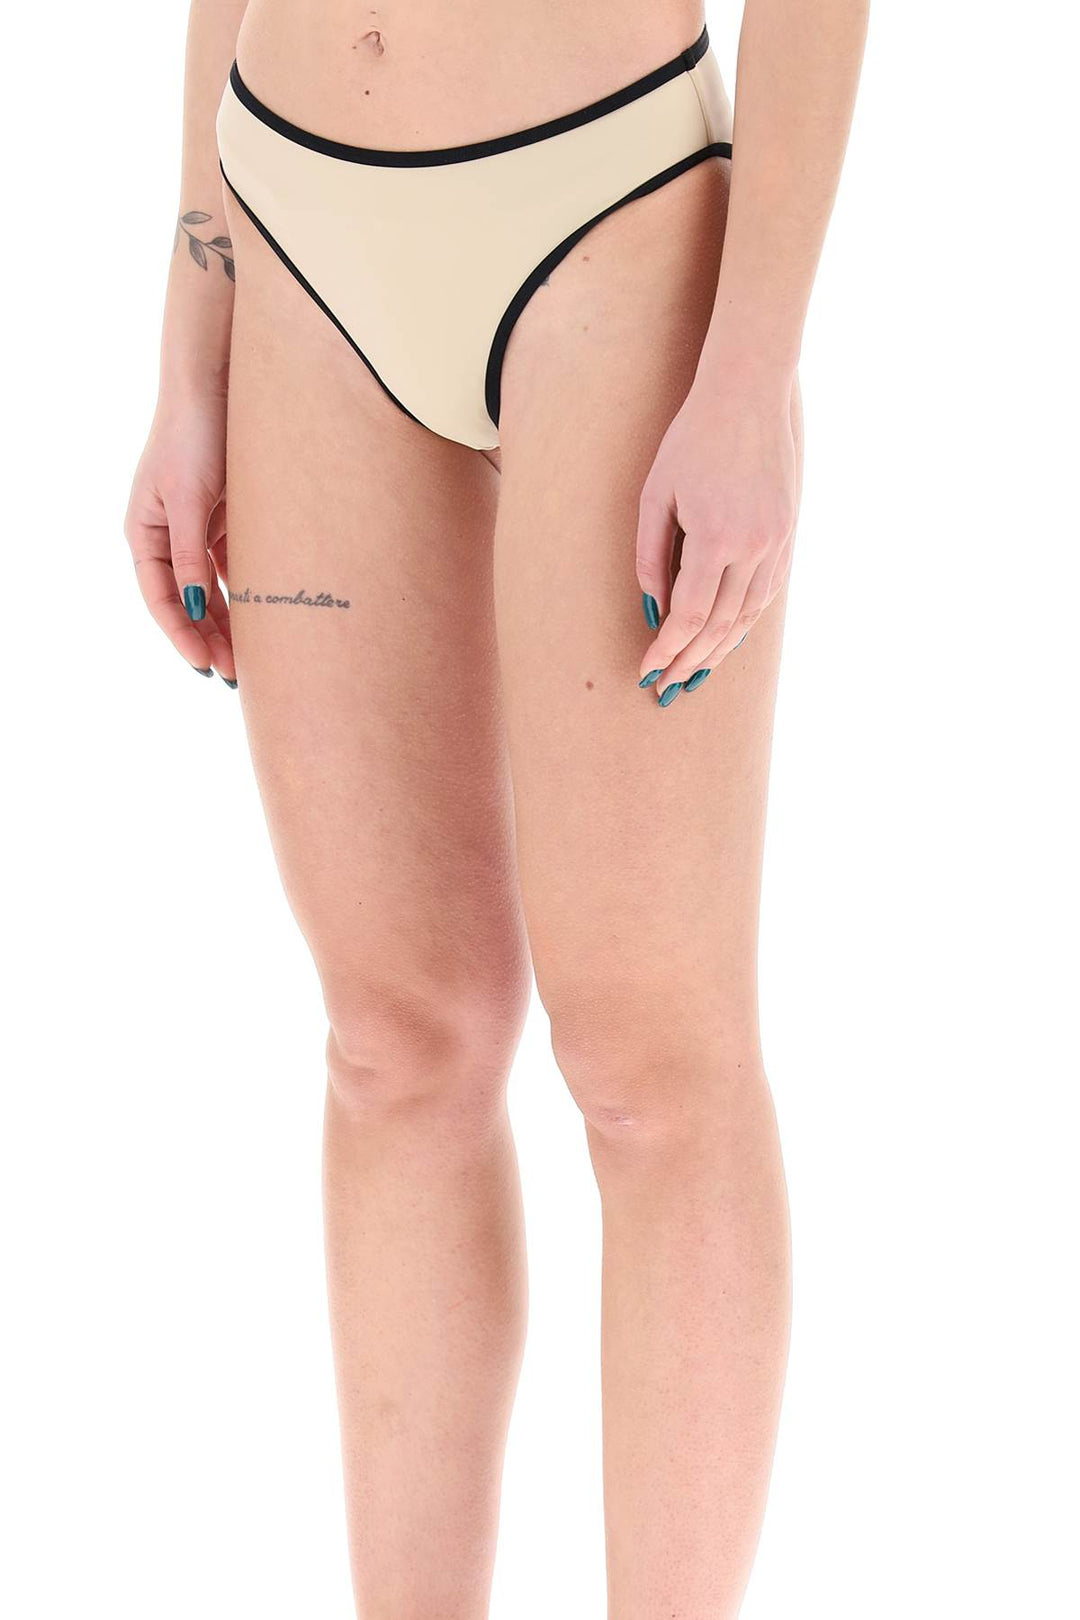 Toteme bikini Bottom With Contrasting Edge Trim   Beige